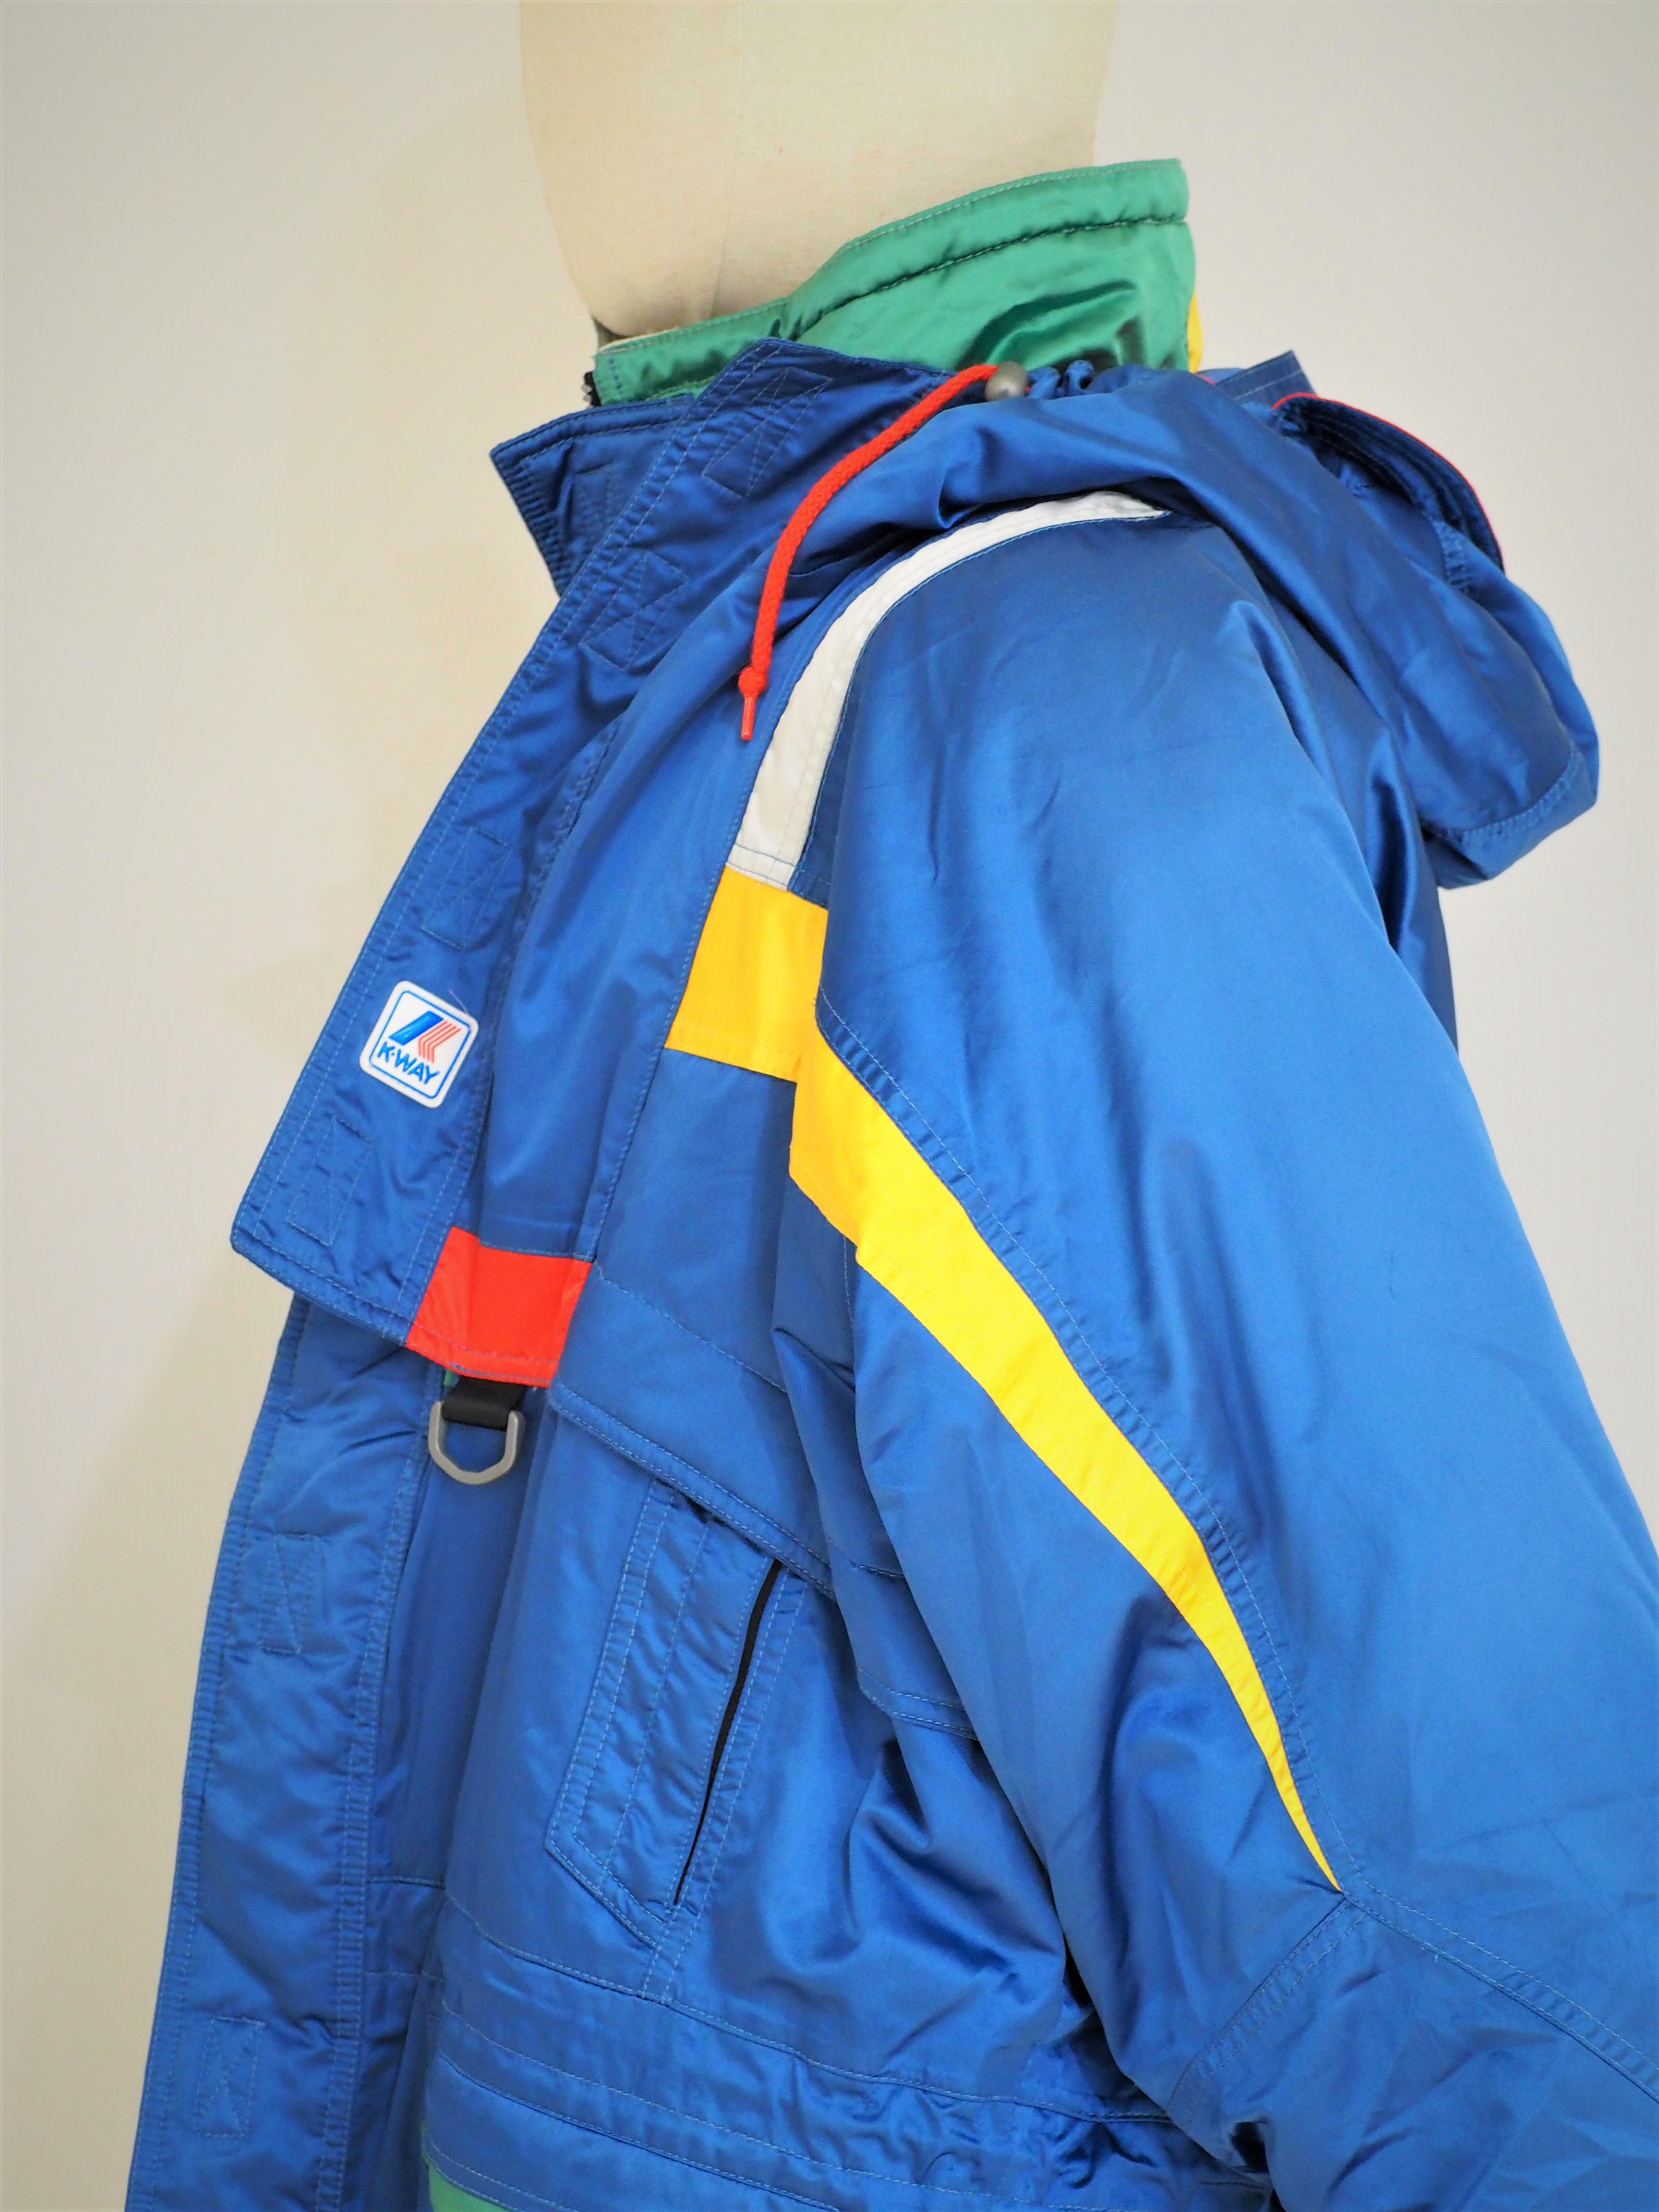 686 pabst blue ribbon jacket